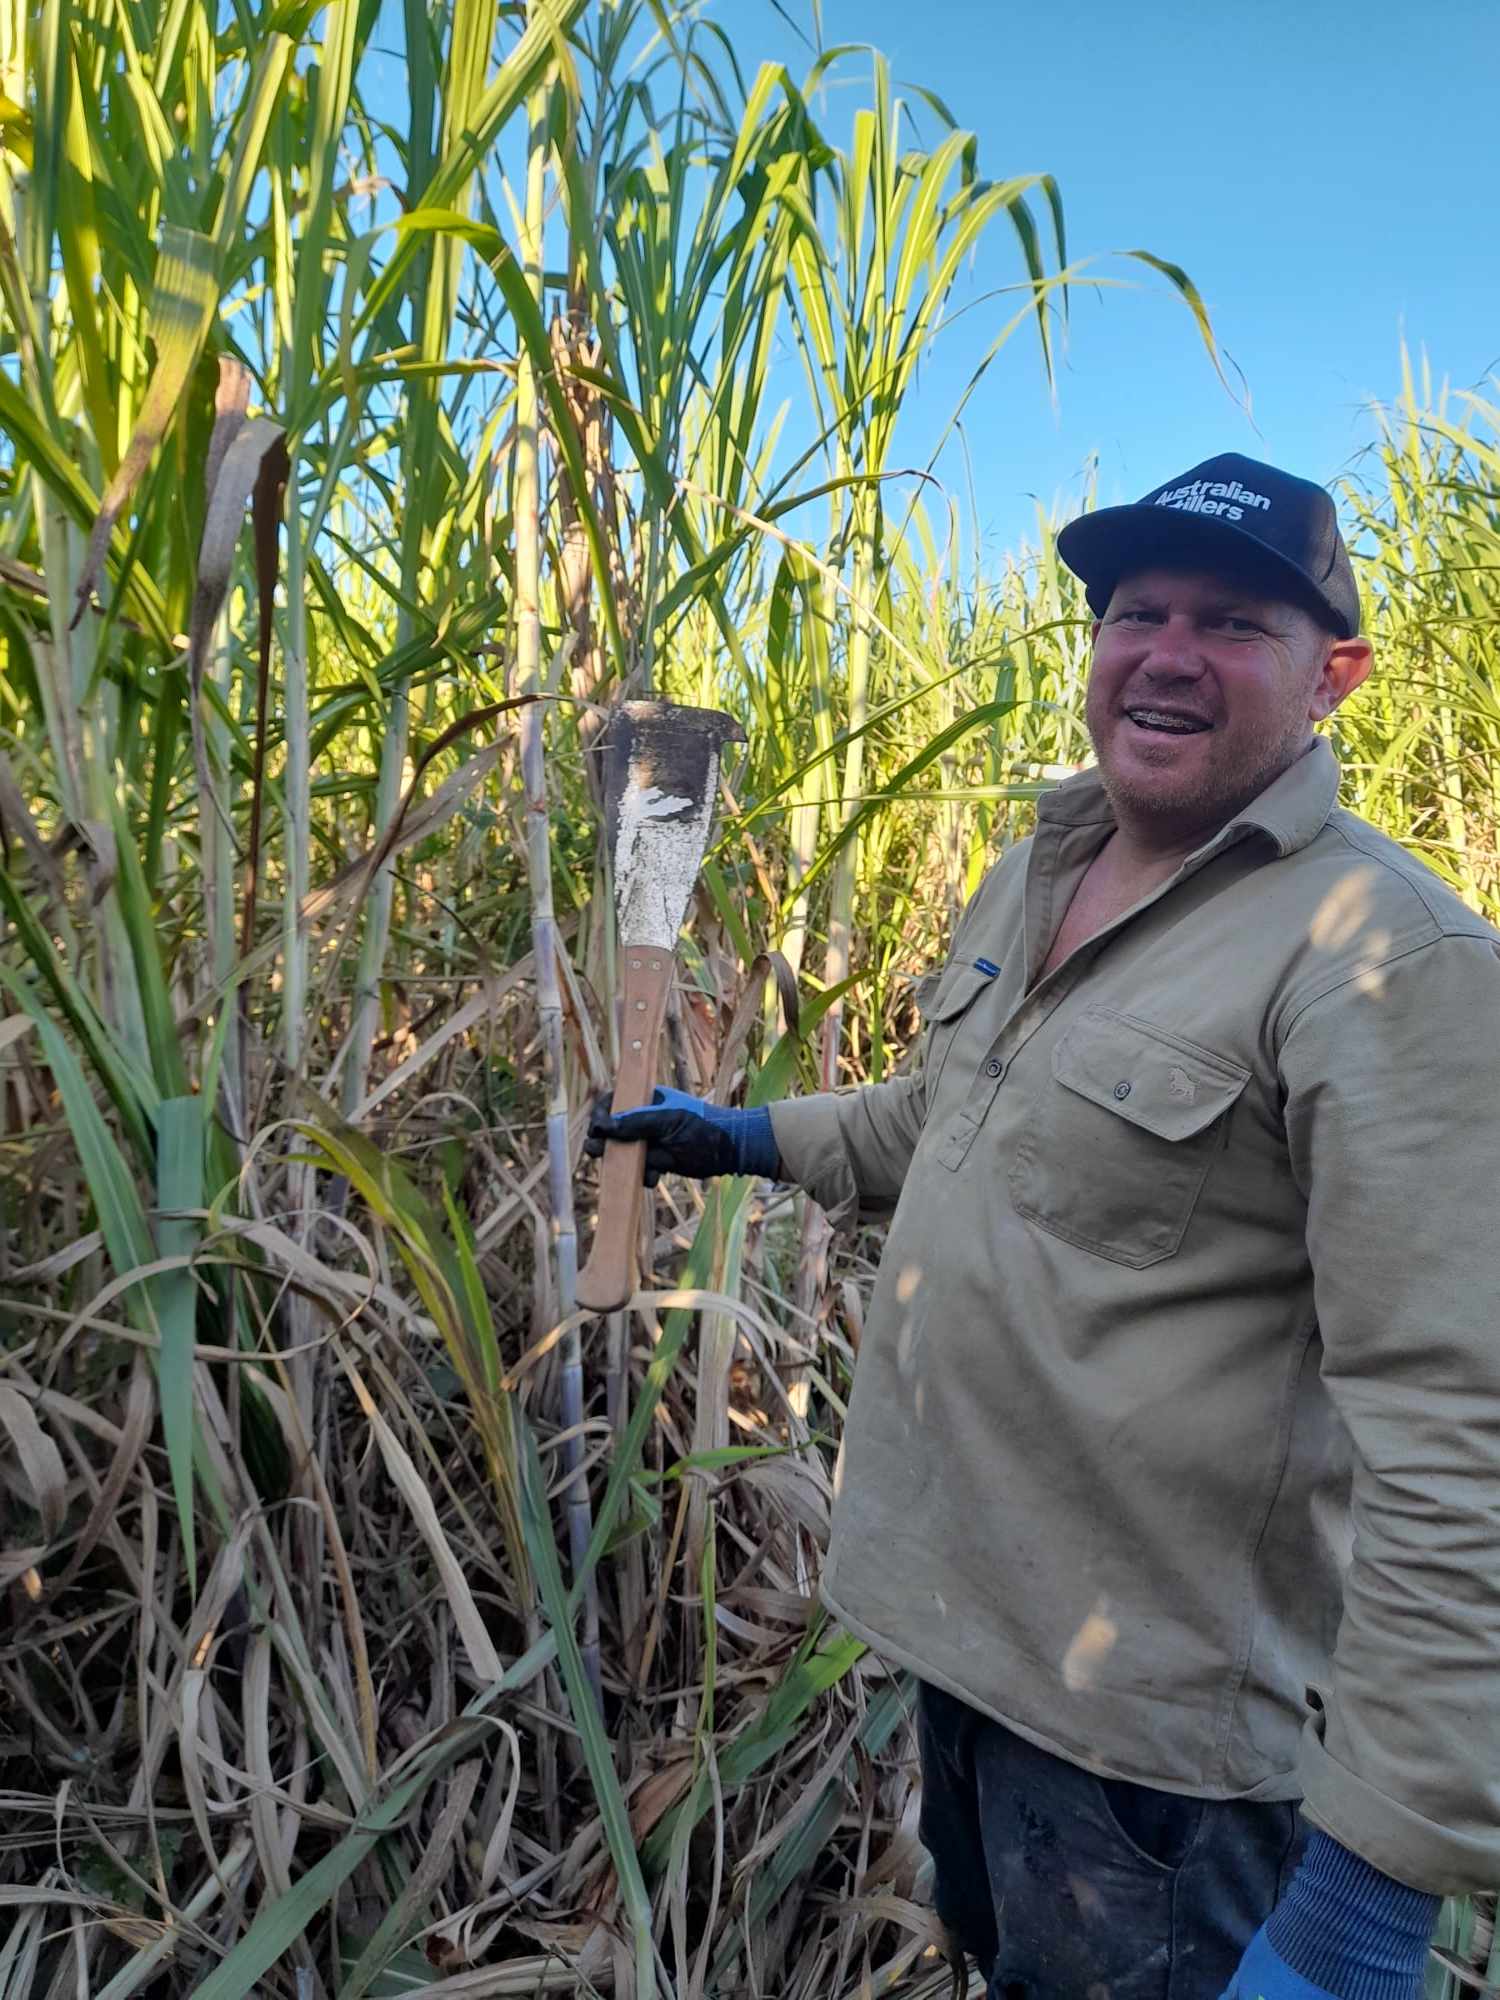 Luke in the field chopping sugar cane